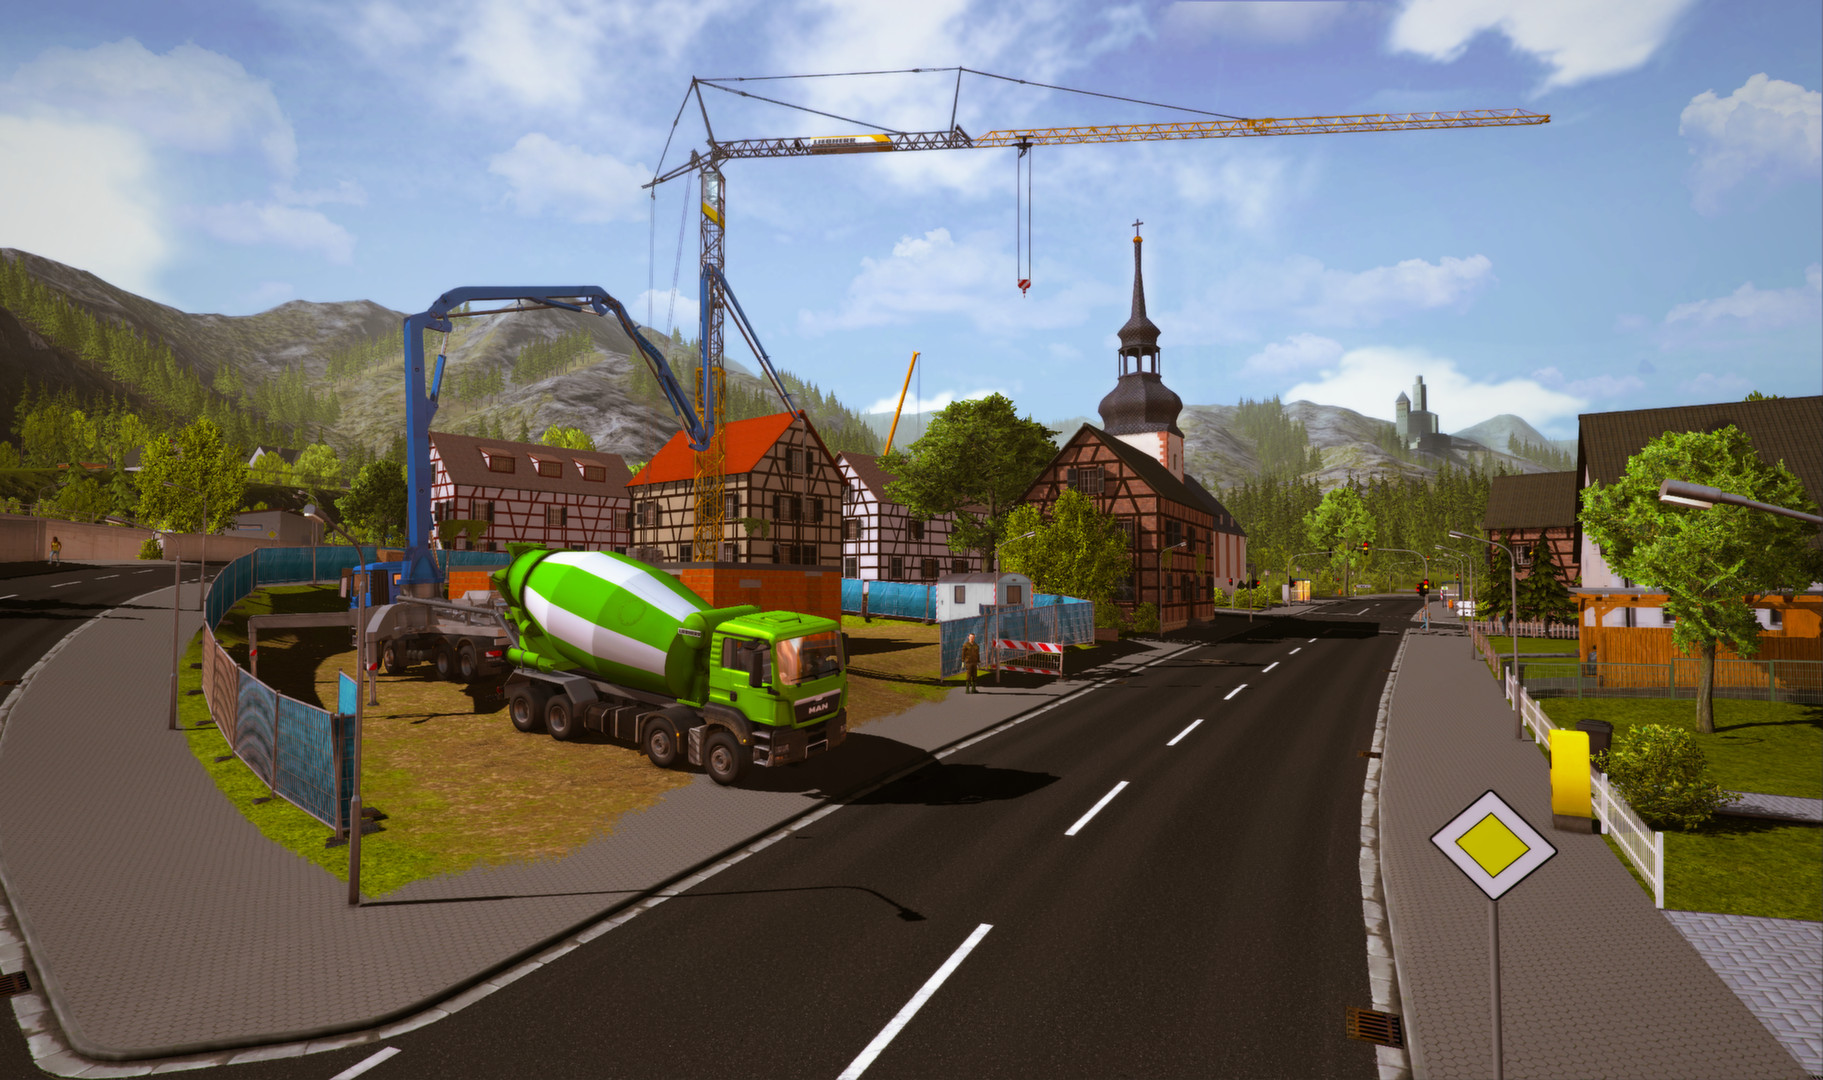 construction simulator 2015 pc game